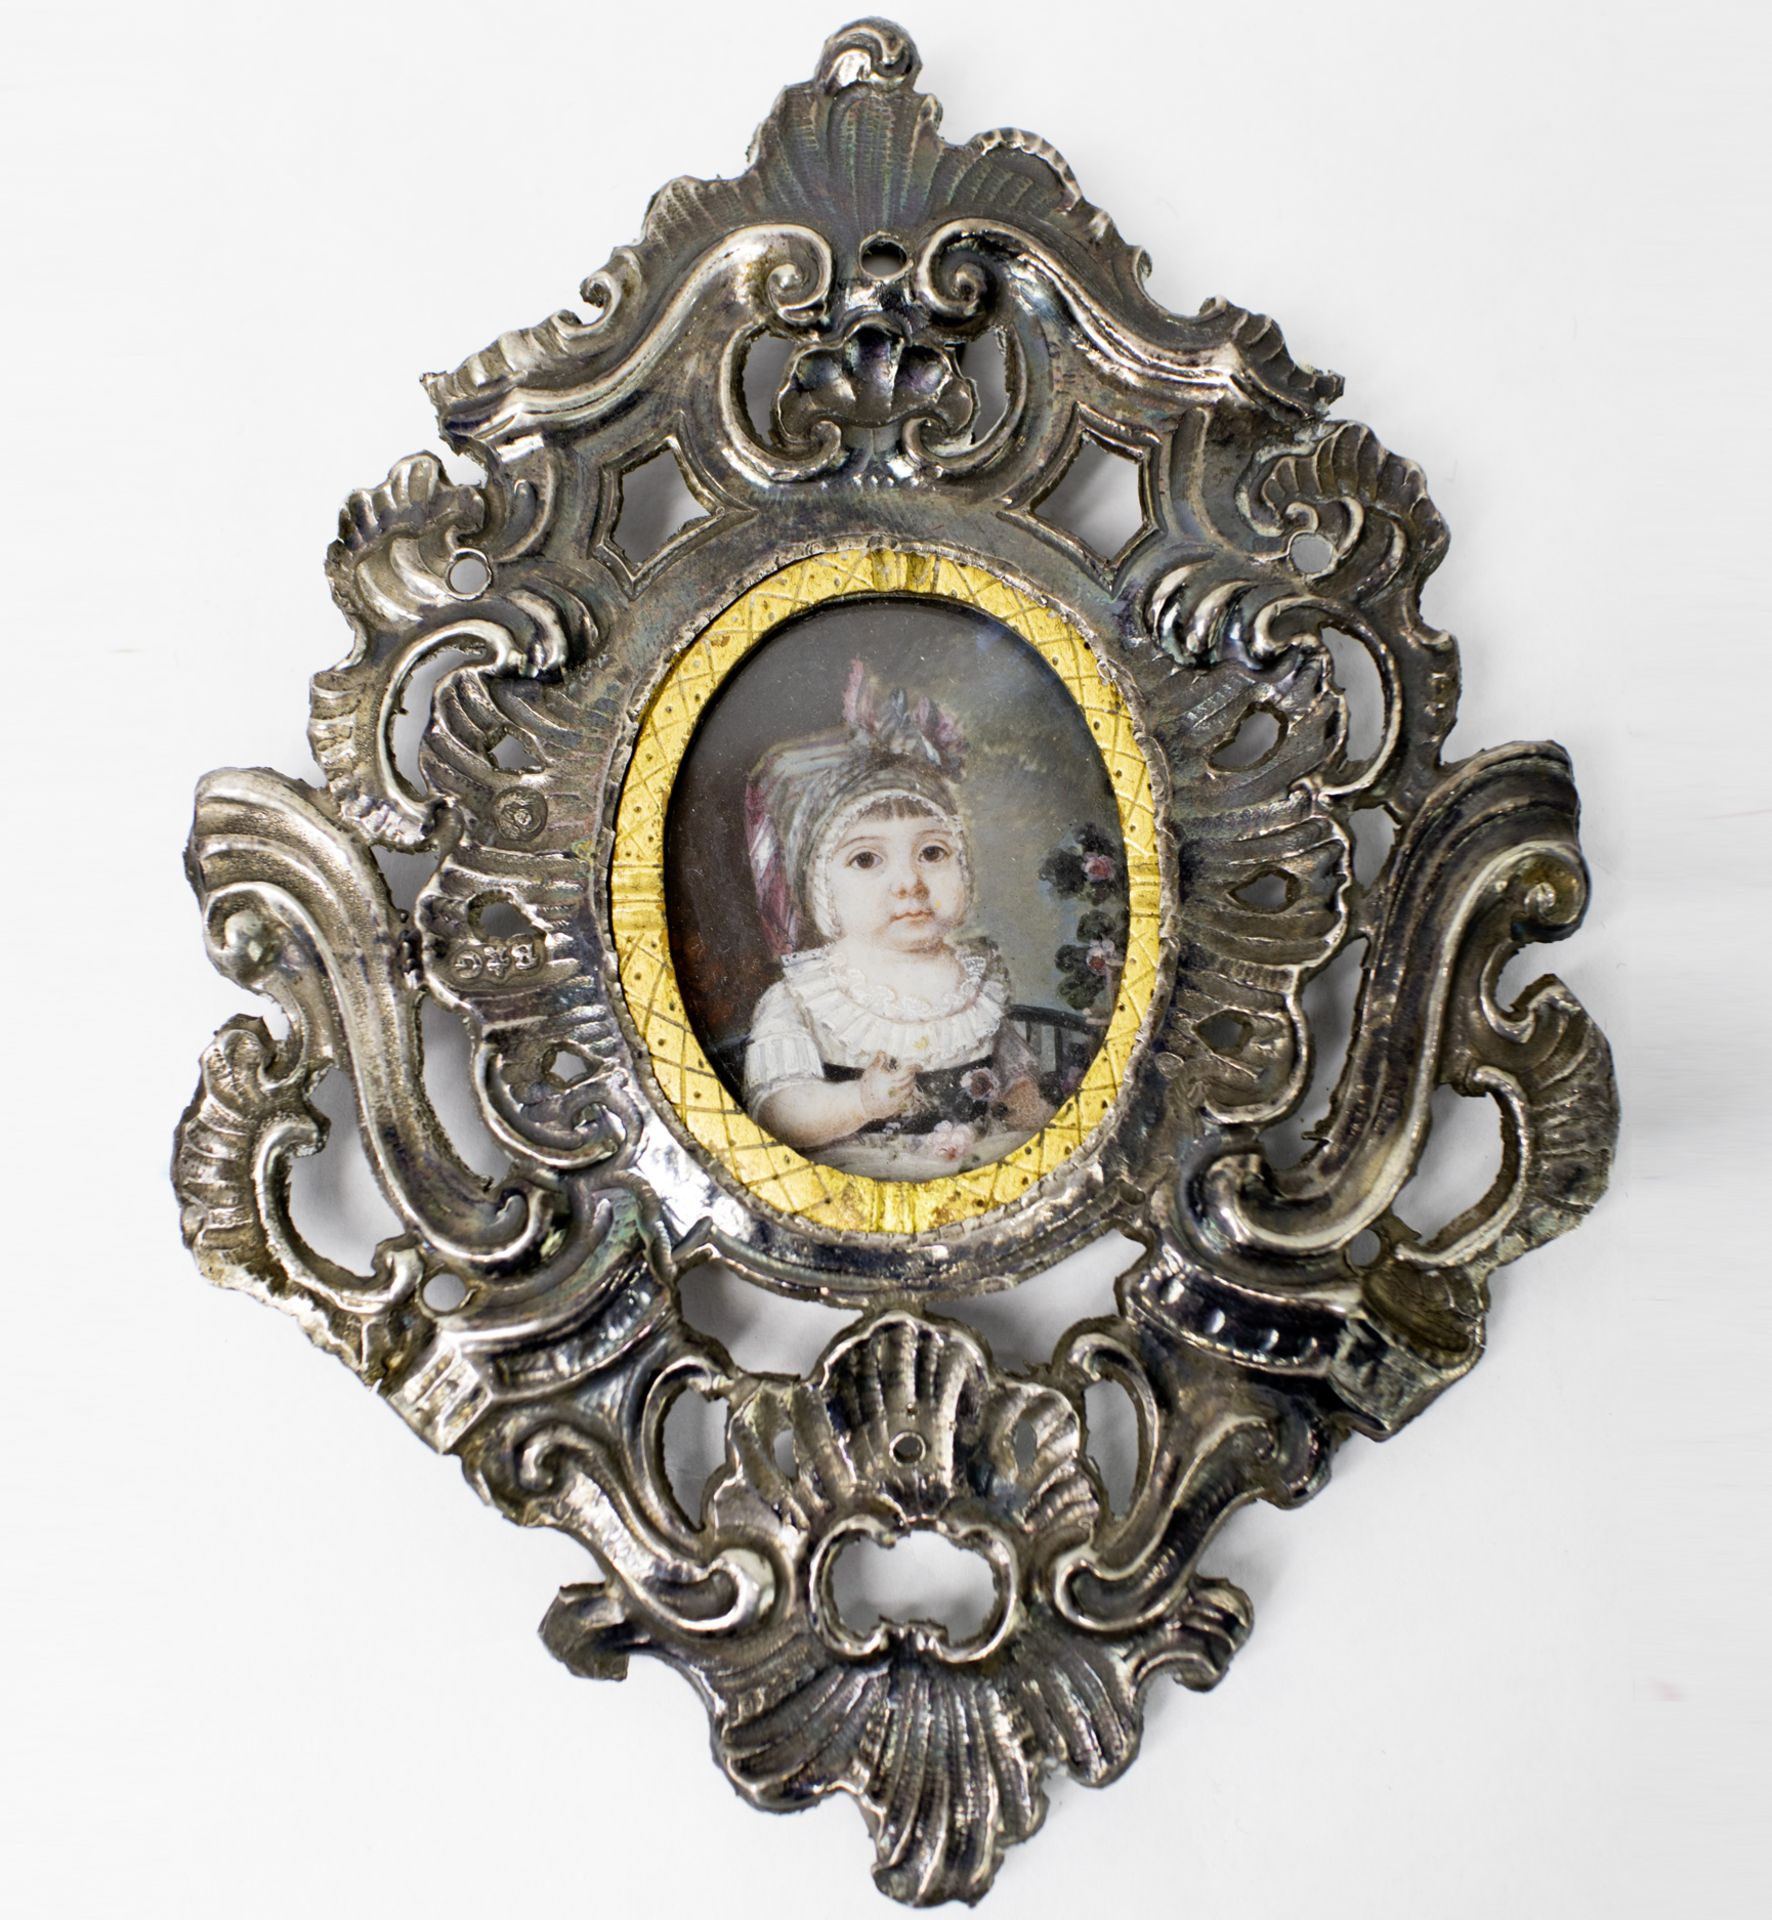 Portraitminiatur, in Rocaillenrahmen aus Silber, 18. Jh.